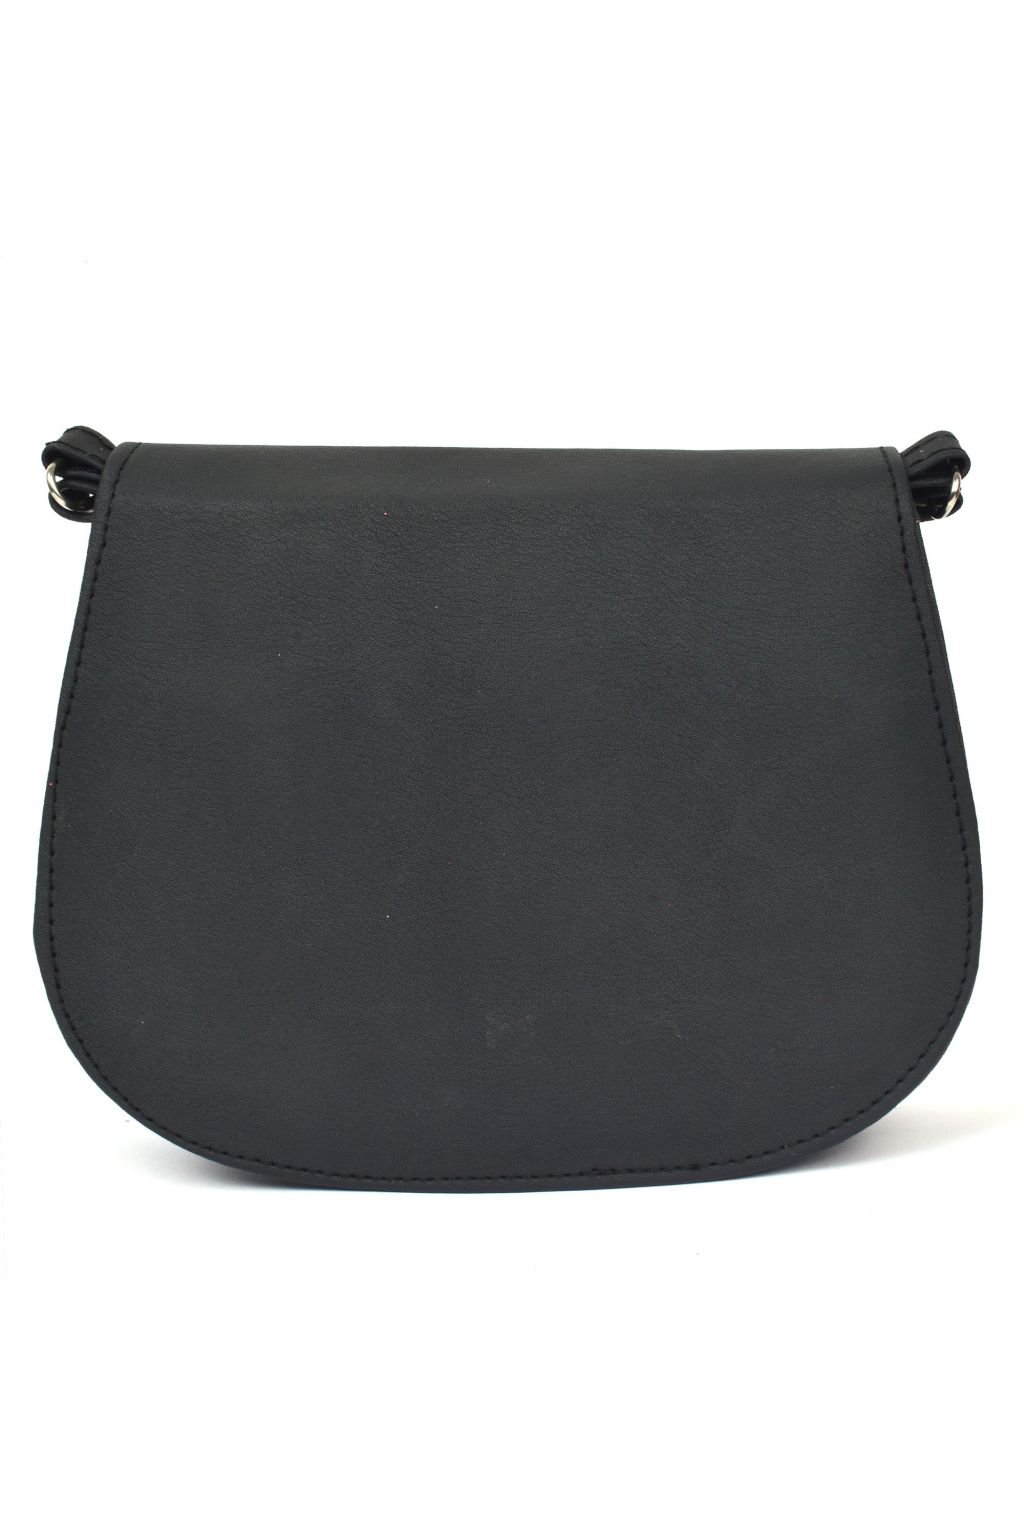 Stylish Black Box Sling Bag for Women- Rimagined